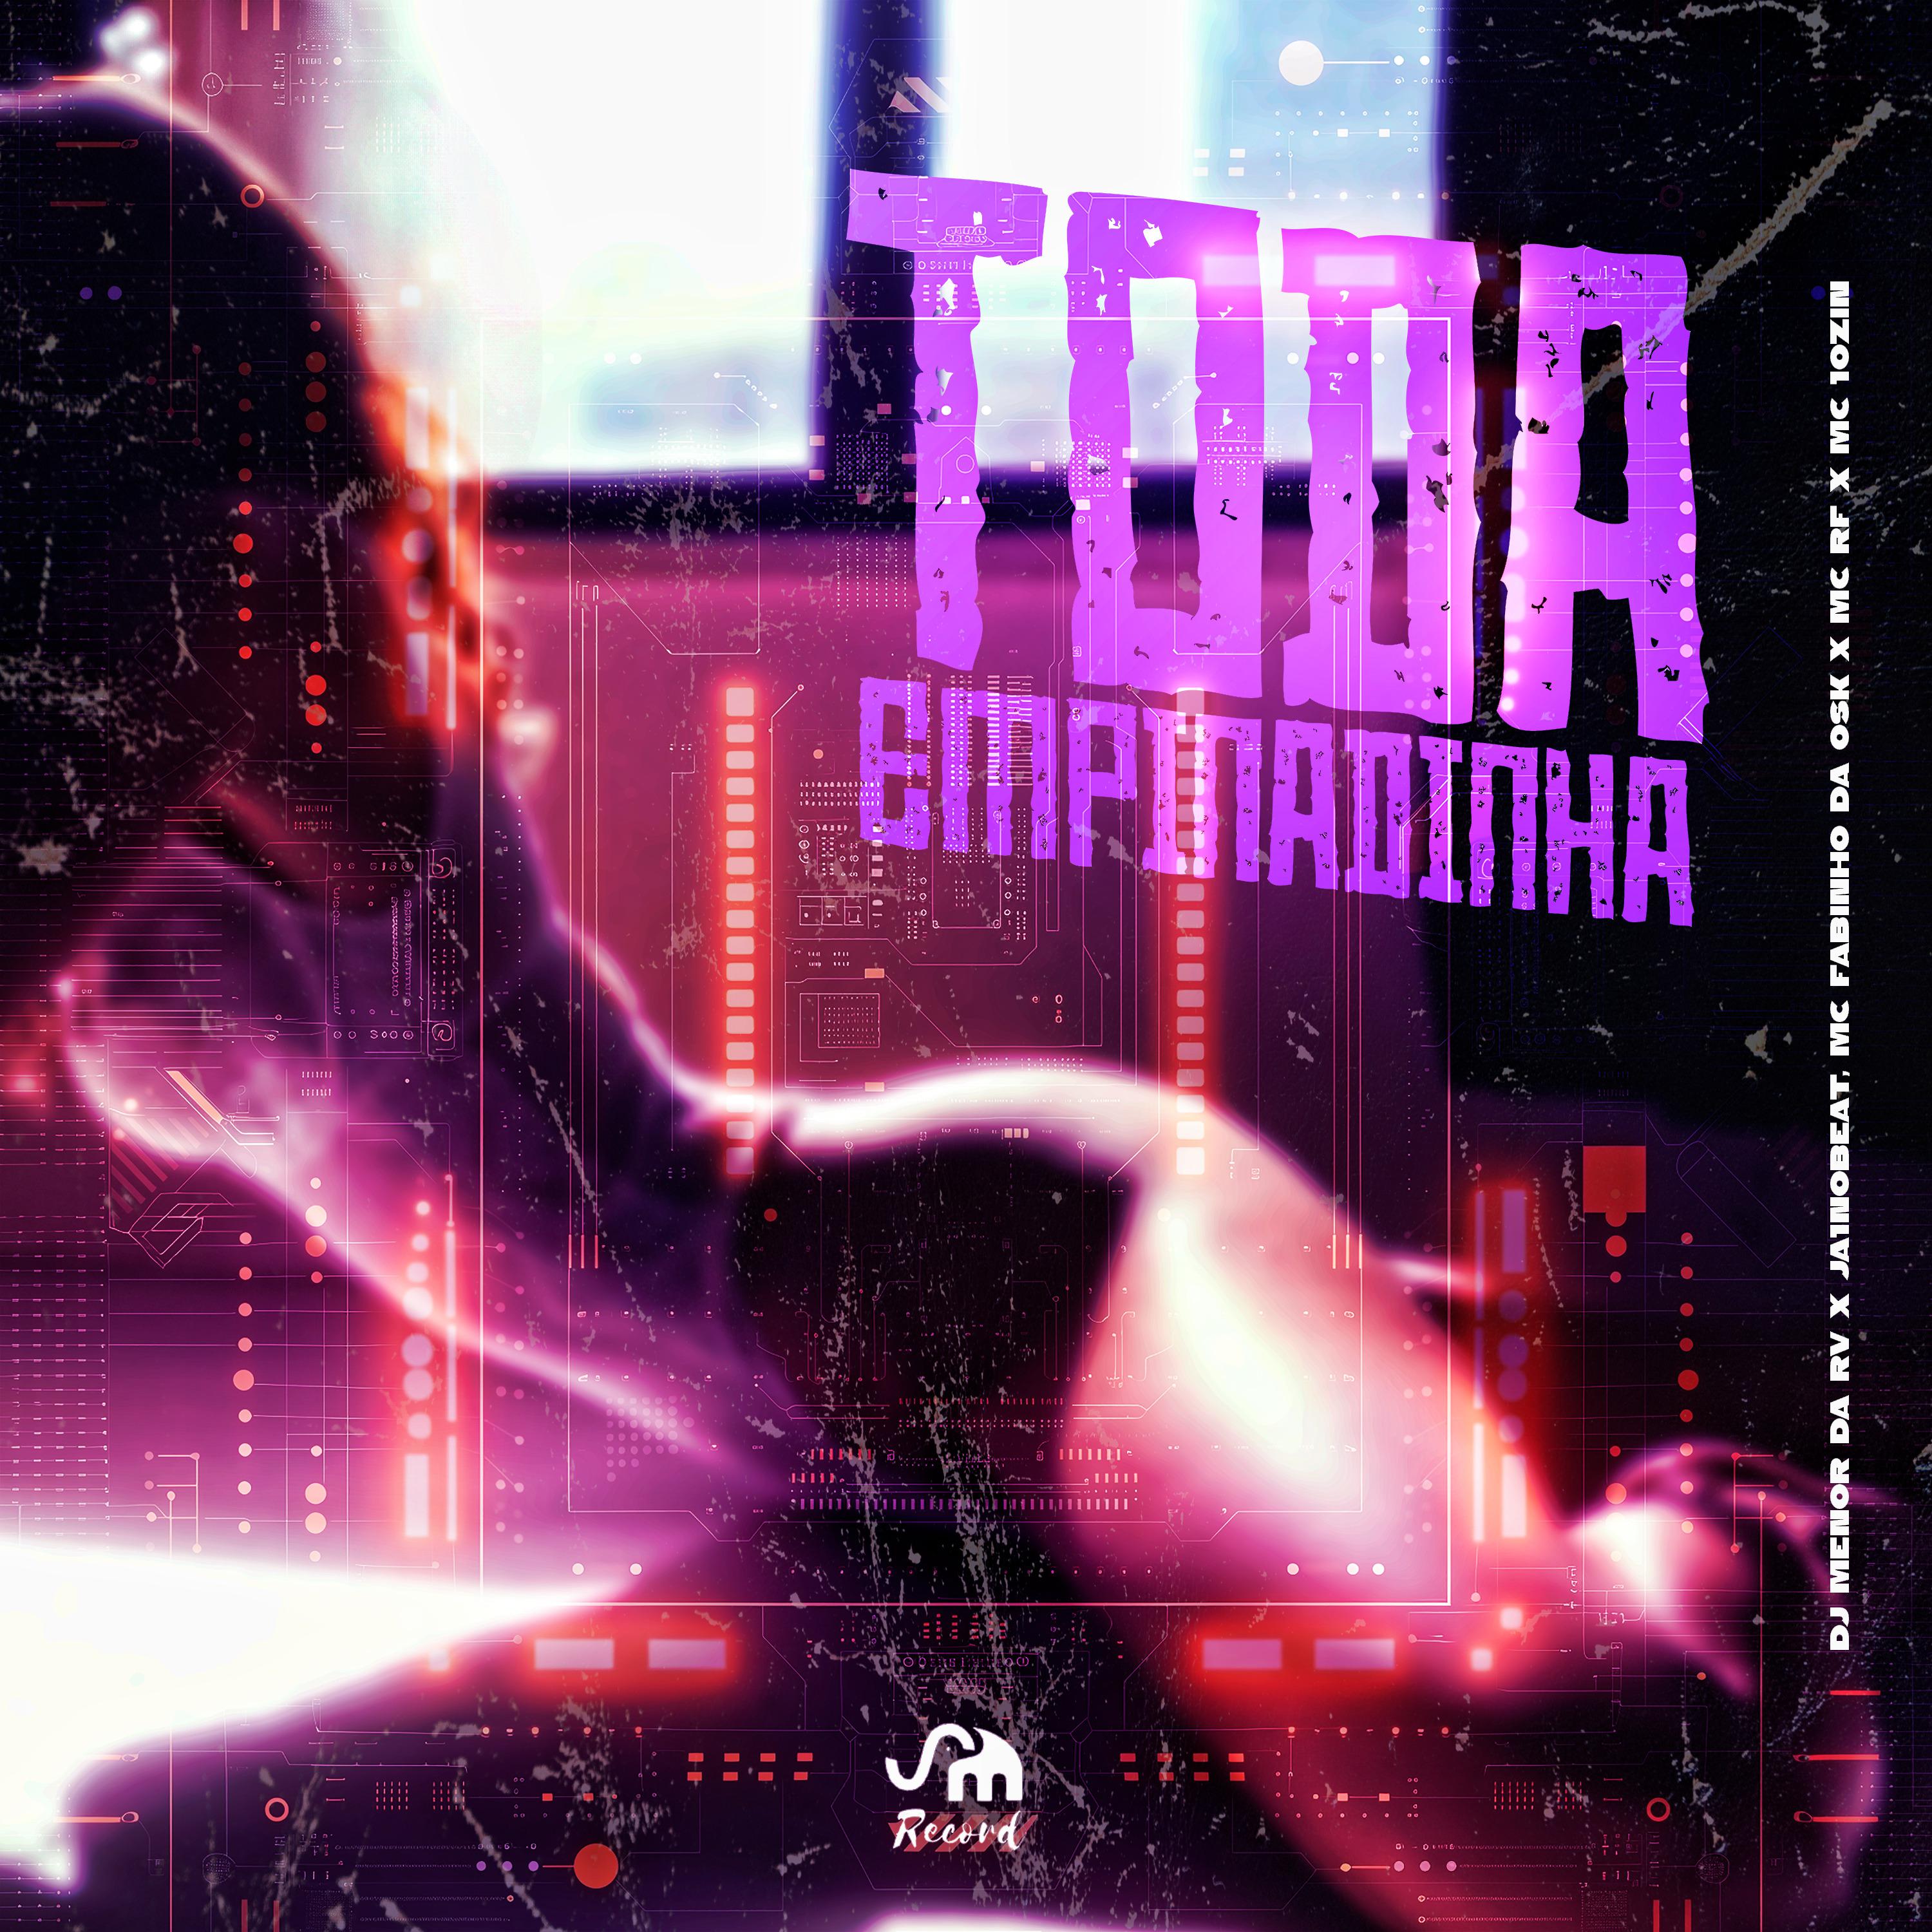 Постер альбома Toda Empinadinha